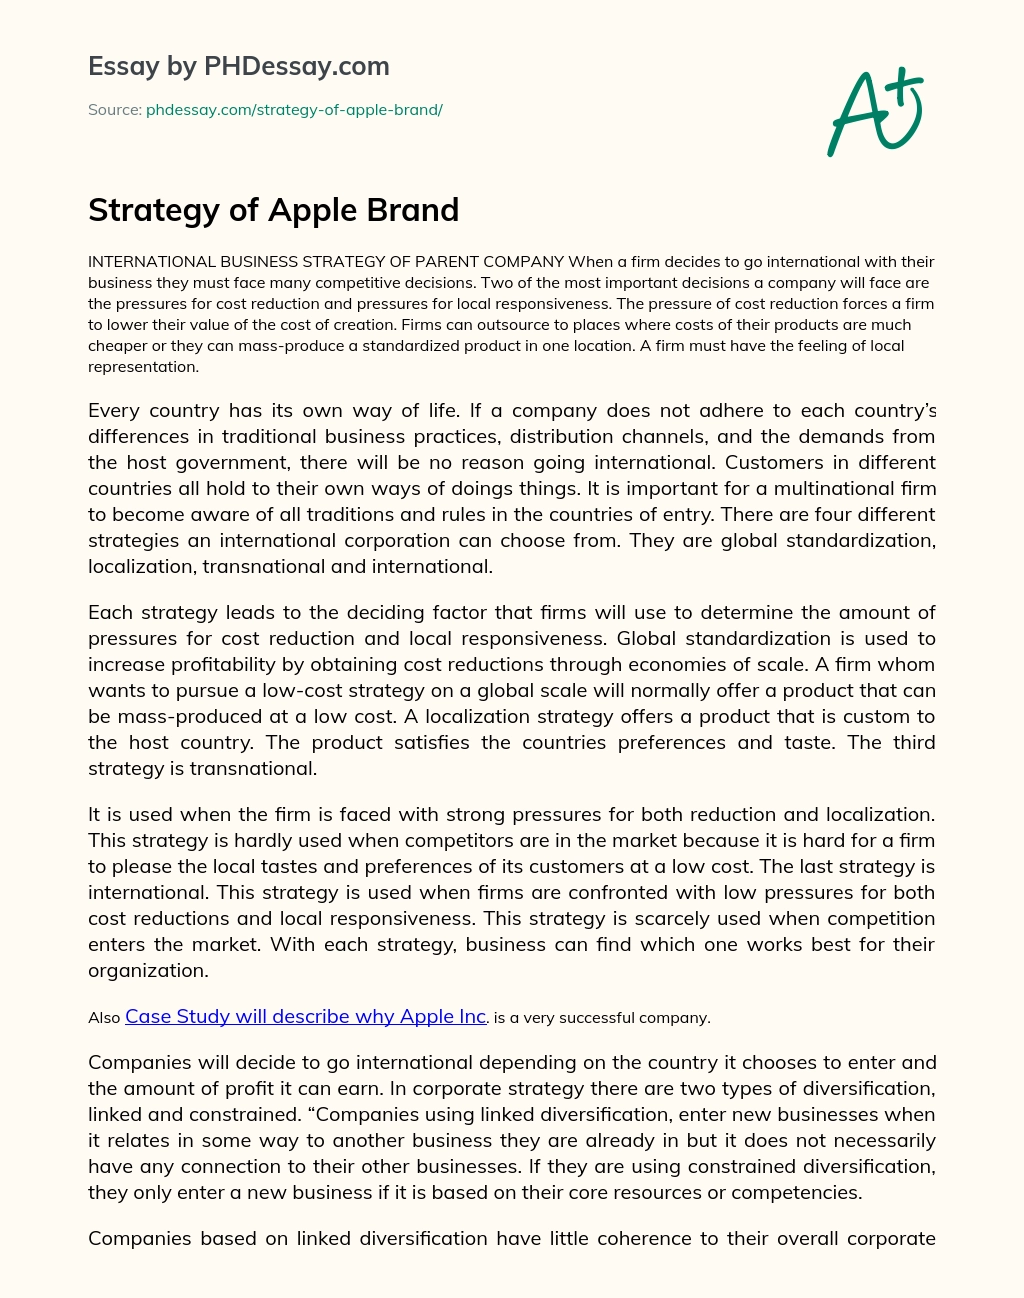 Strategy of Apple Brand essay